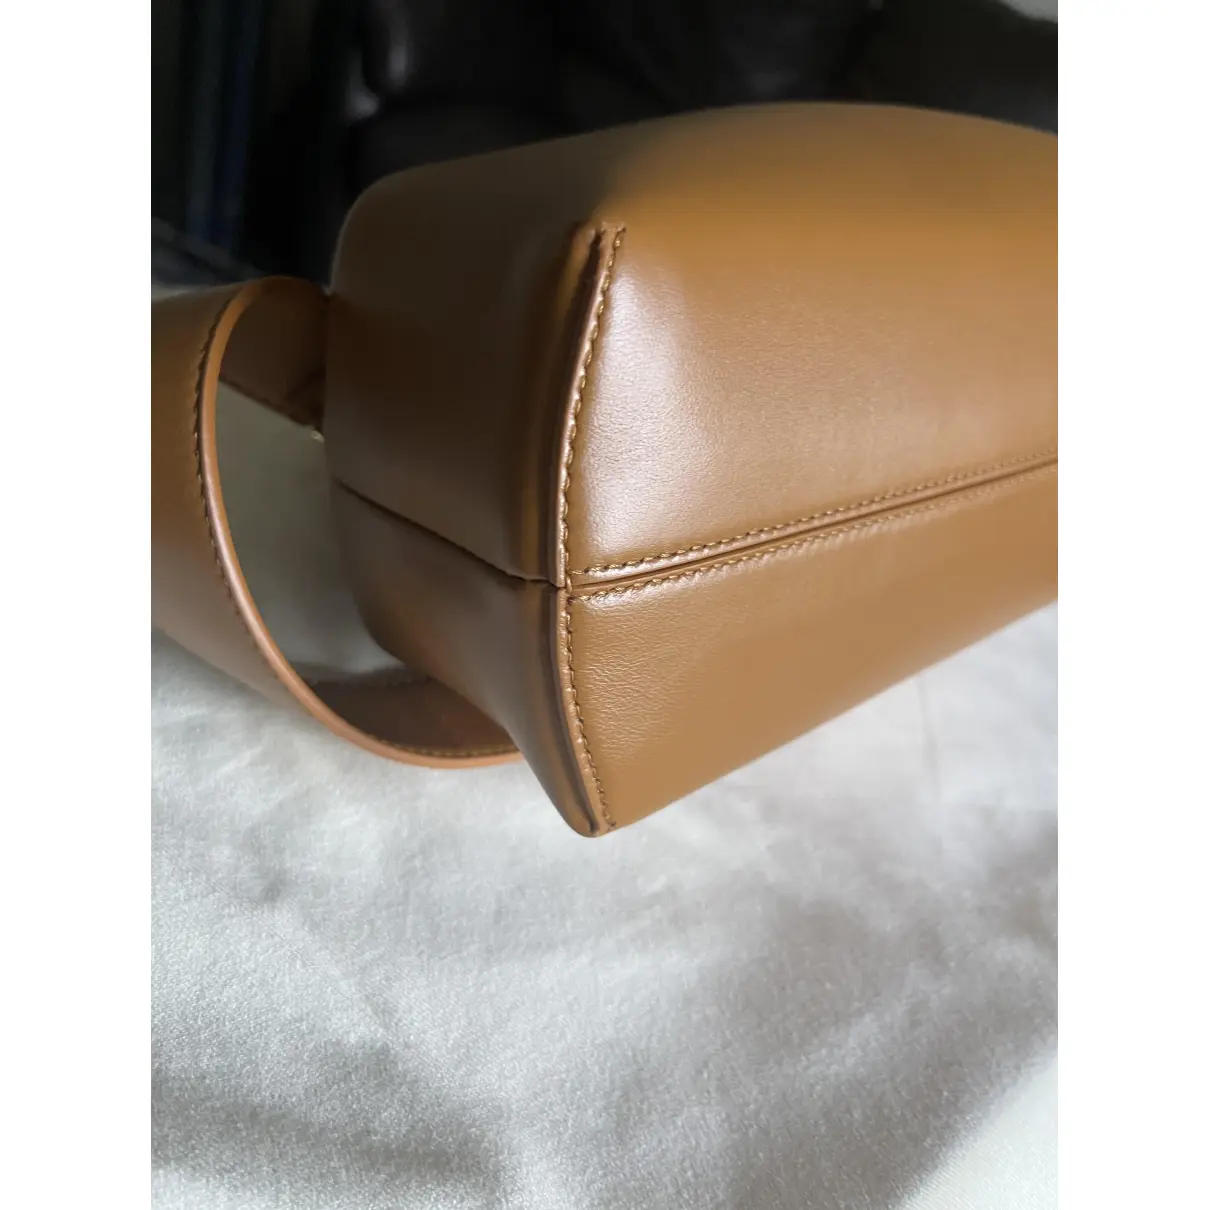 Buy Fendi Leather handbag online